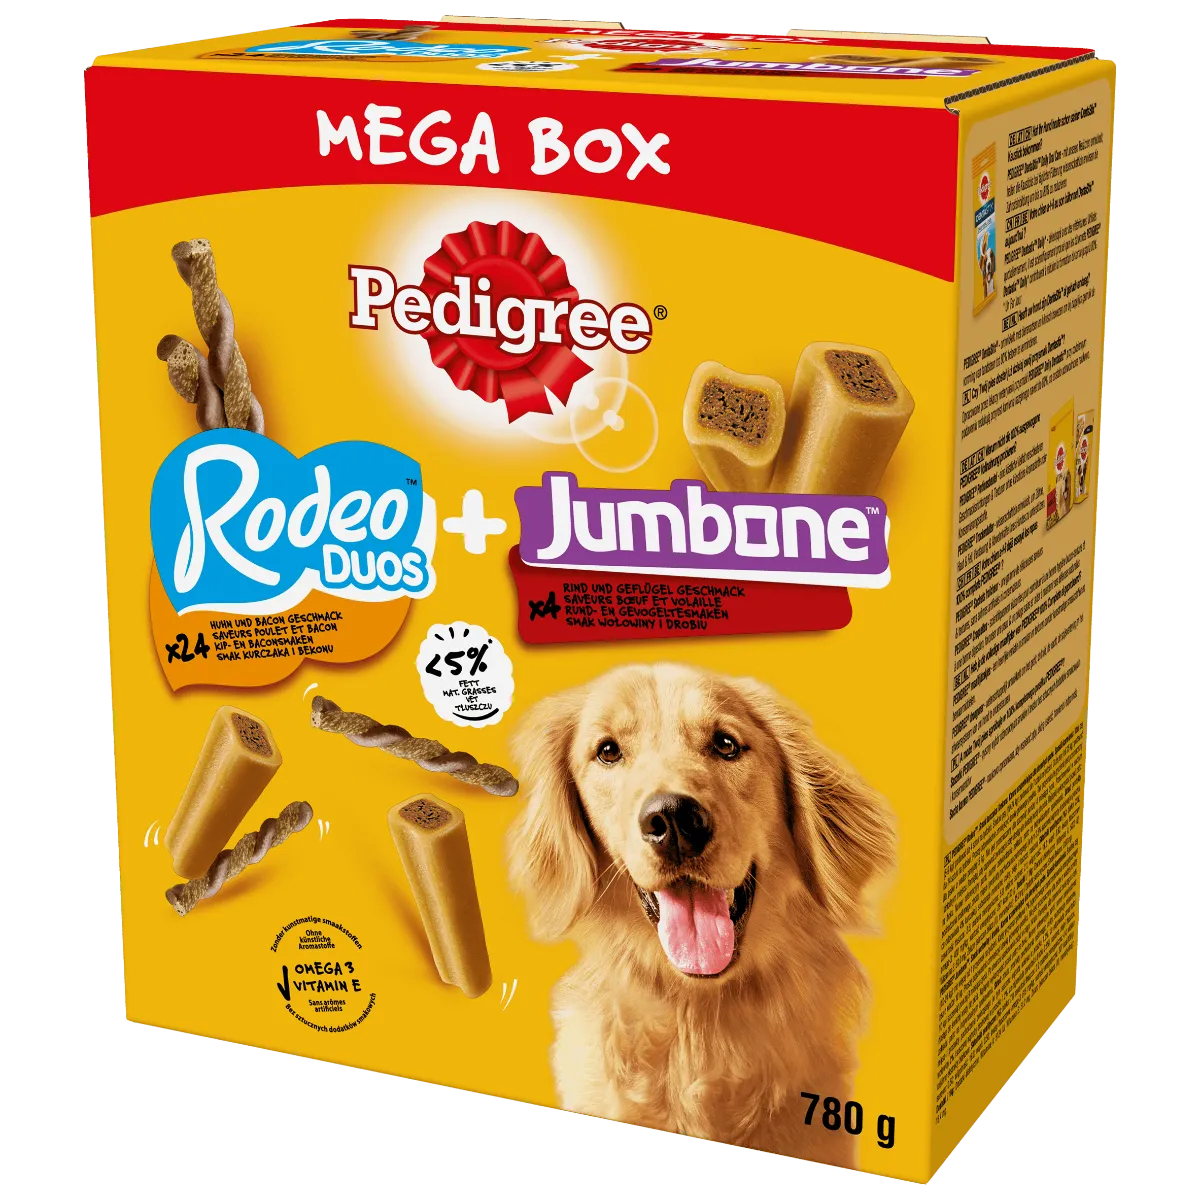 Pedigree Rodeo + Jumbone Przysmak dla psa Mega Box, 780g